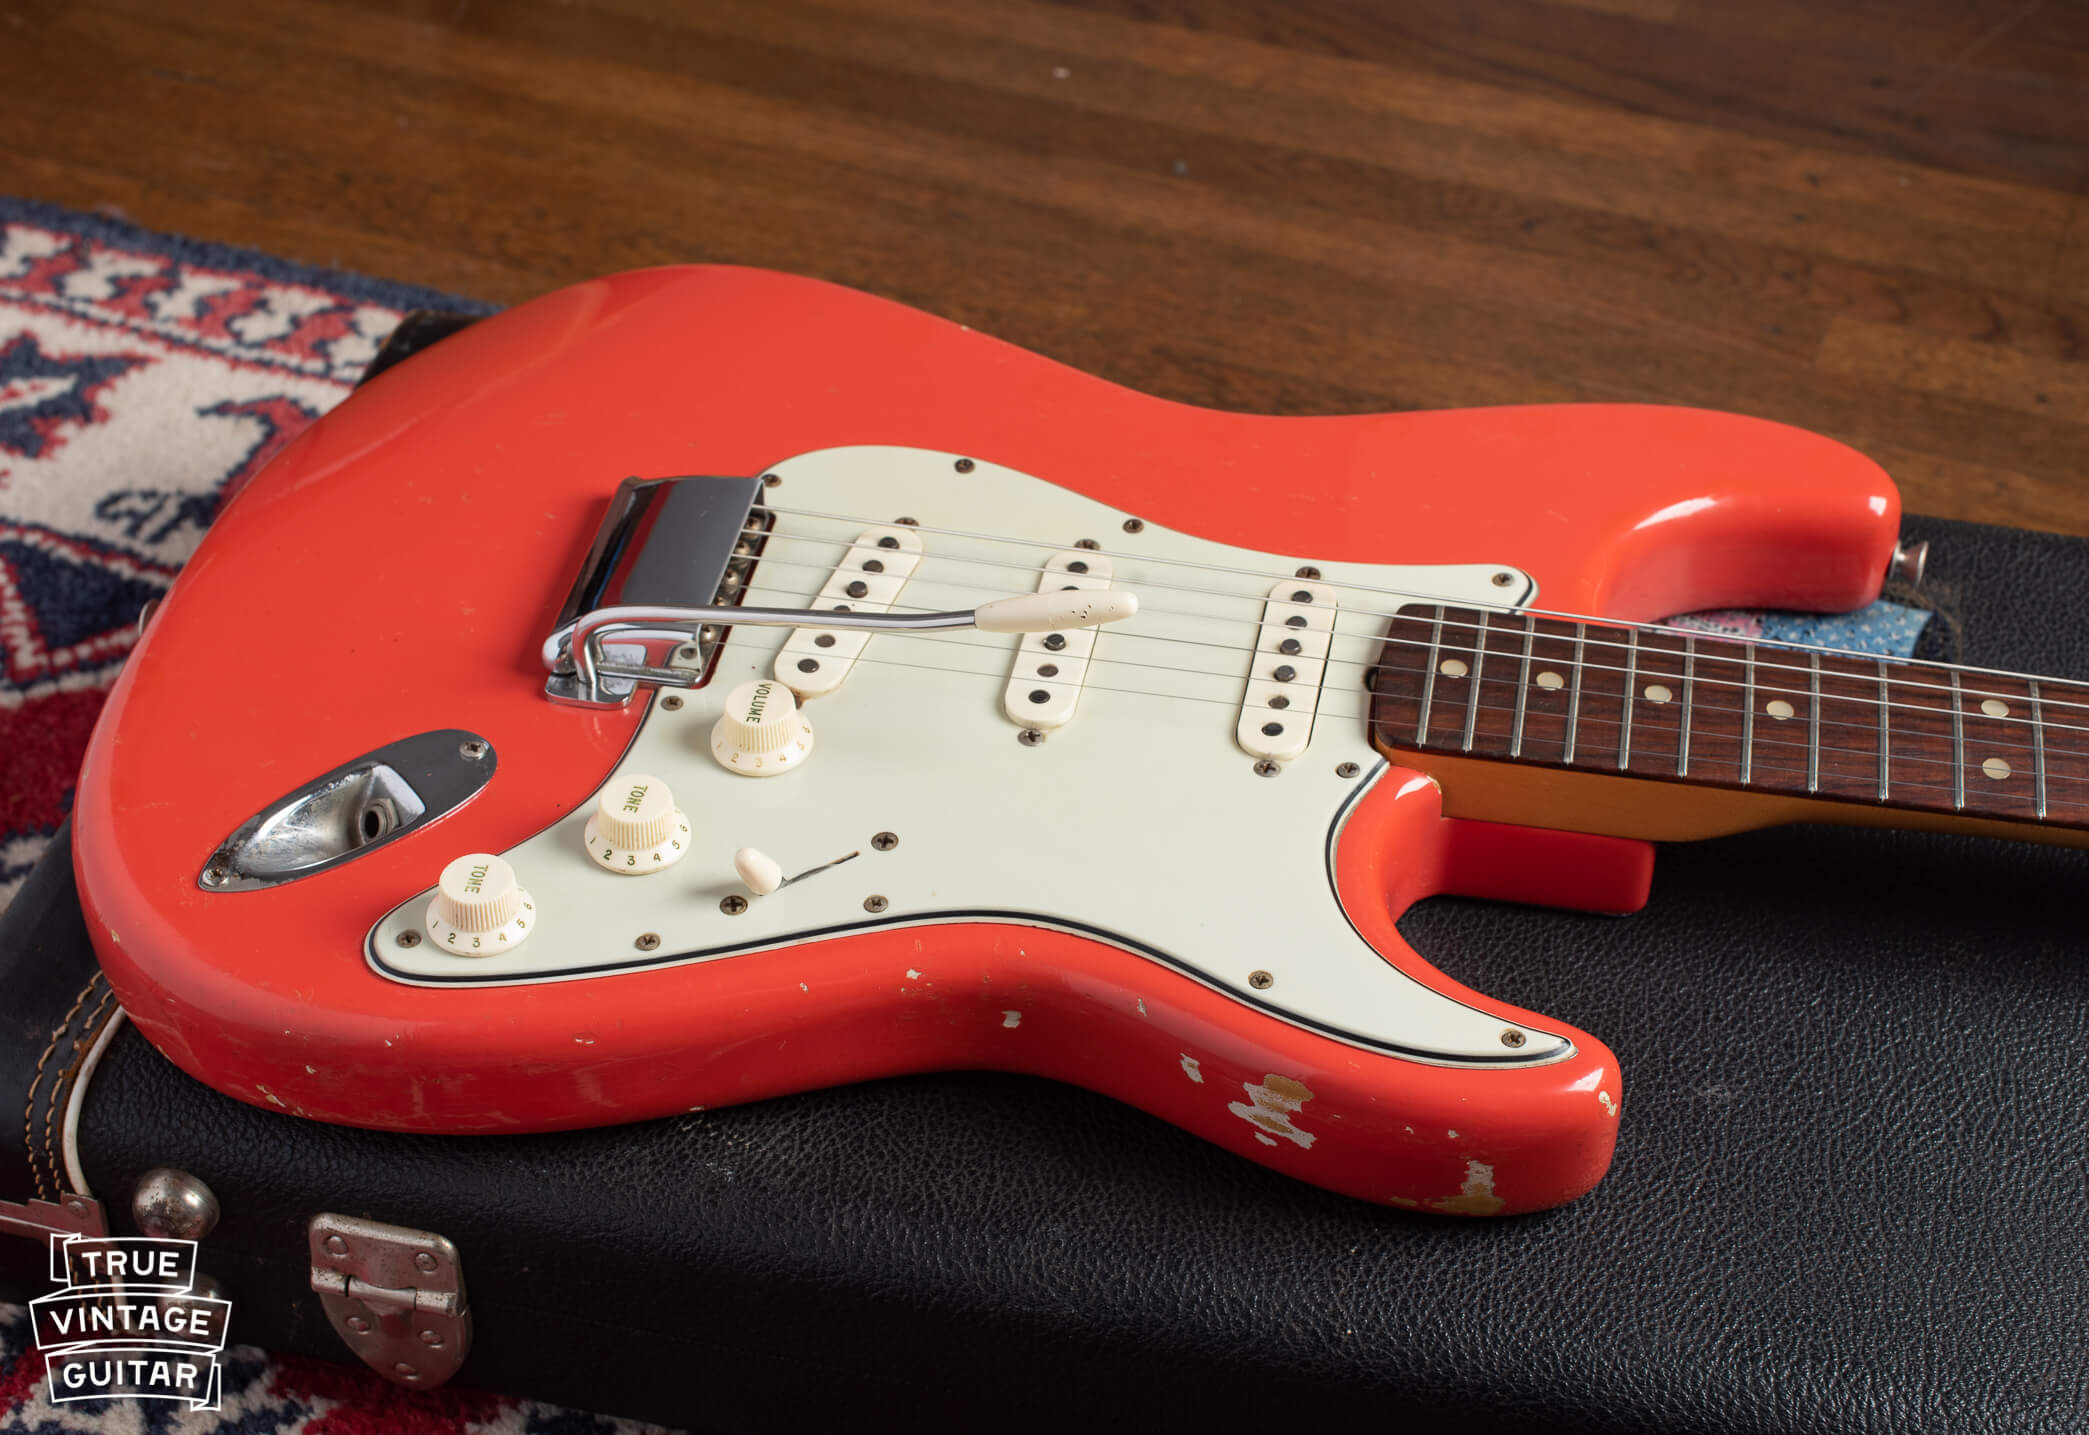 1965 Fender Stratocaster photo galleries